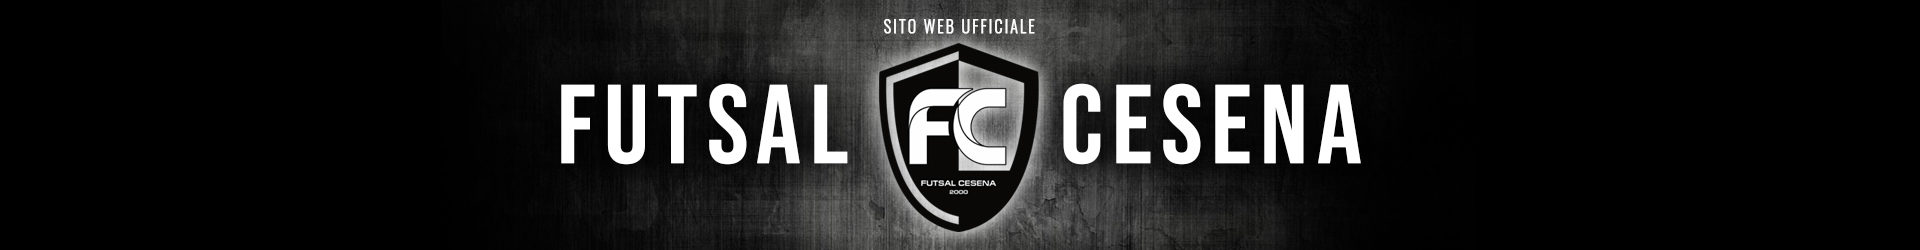 Coppa Italia: Futsal Cesena-Forlì 4-1